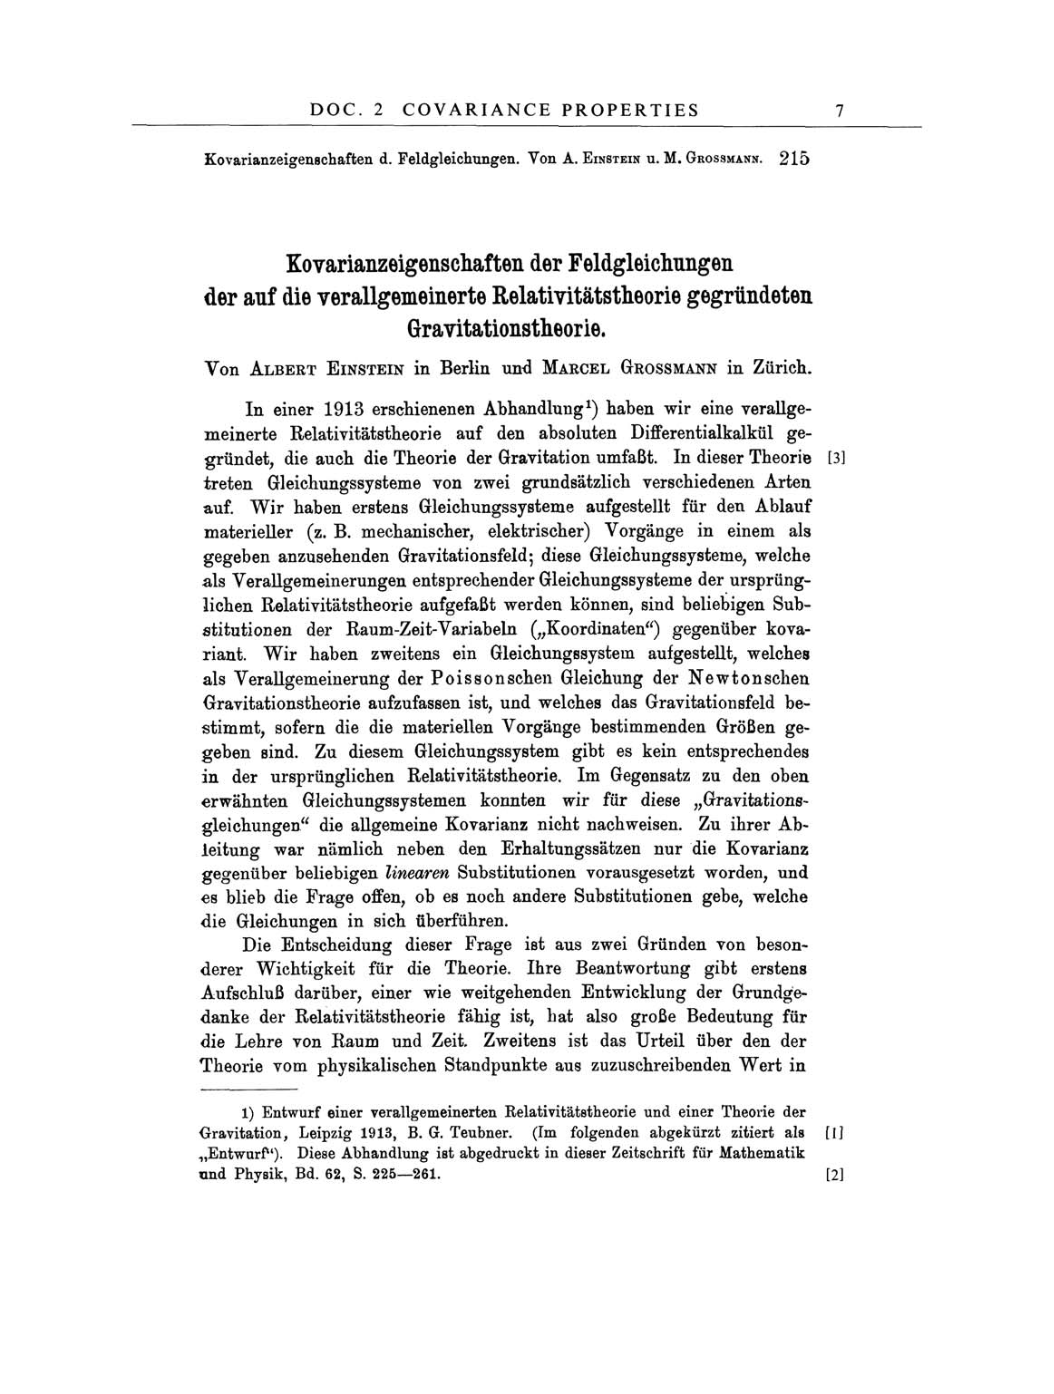 Volume 6: The Berlin Years: Writings, 1914-1917 page 7